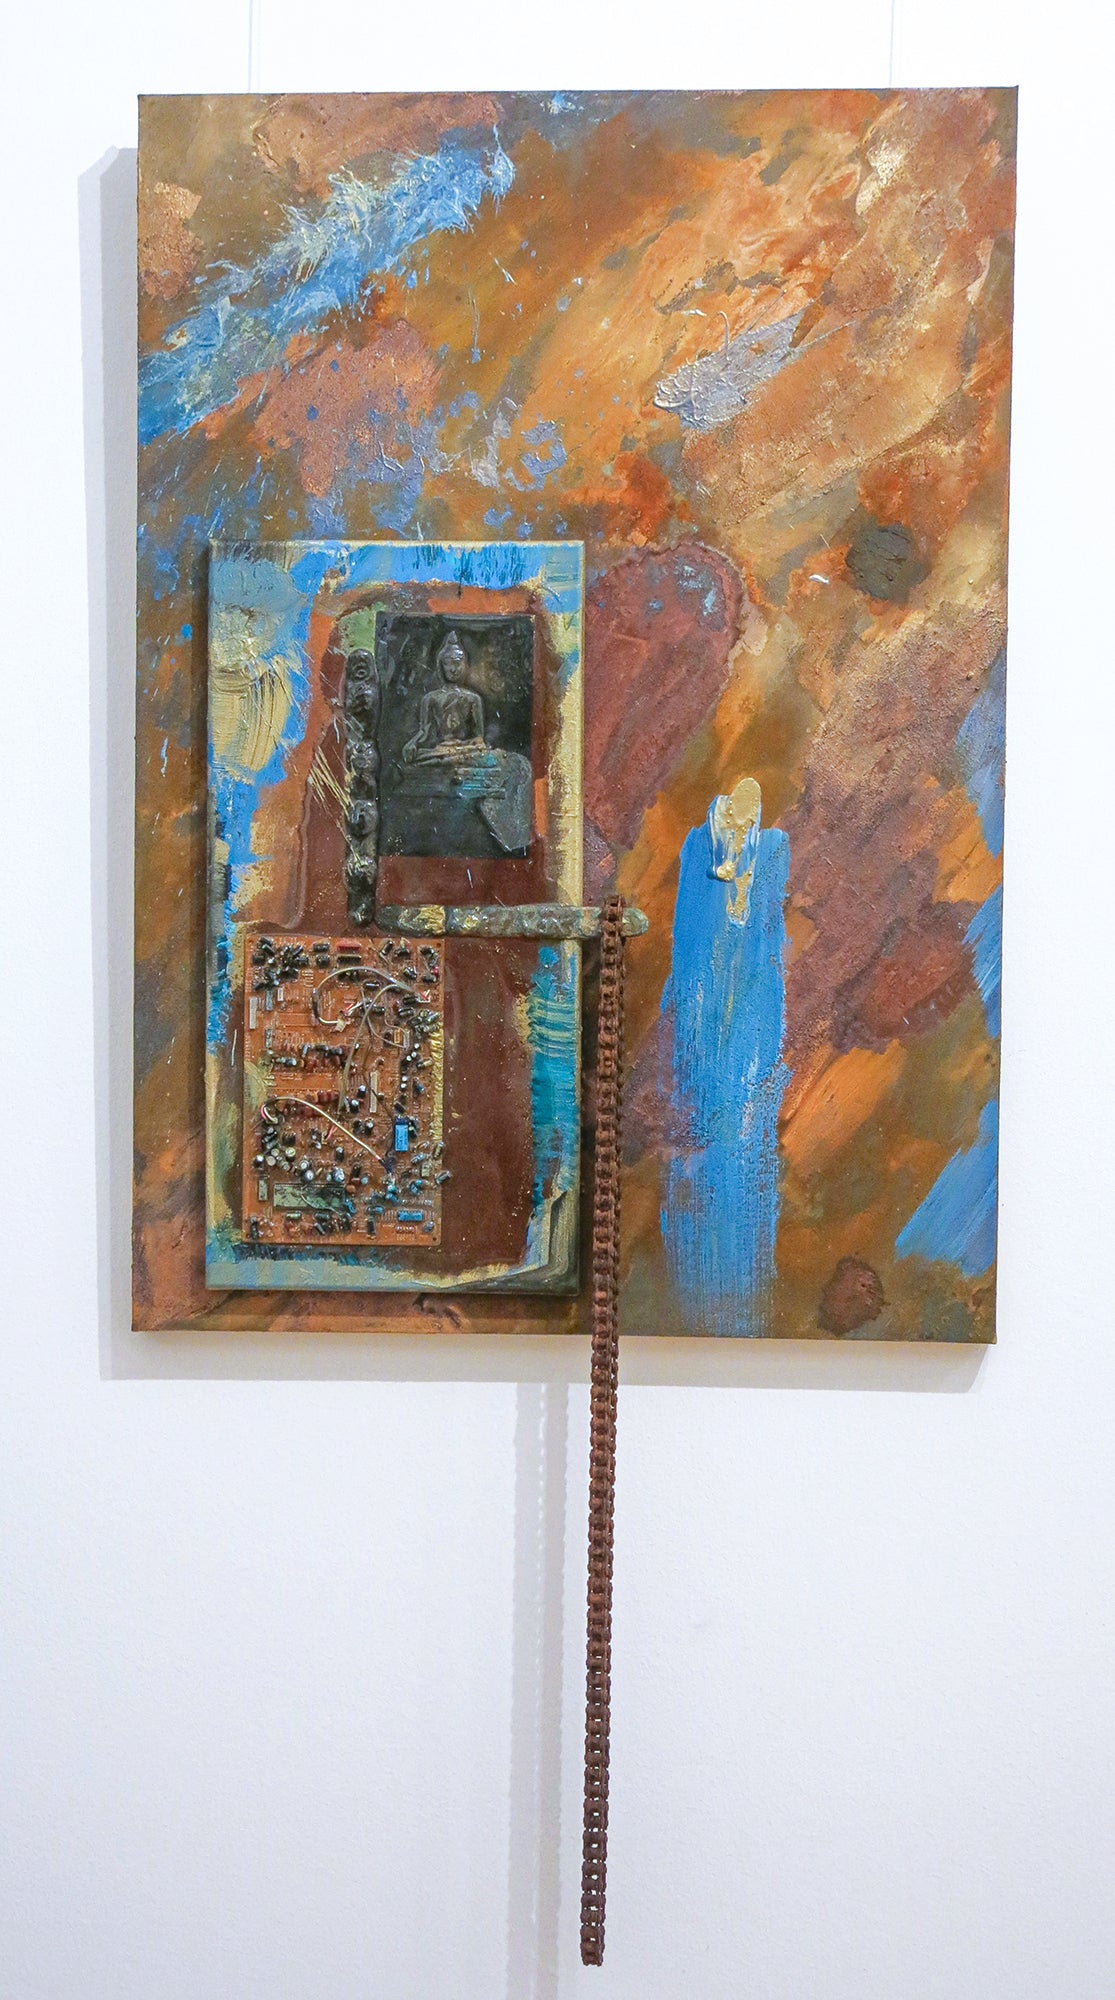 'Bound' (Art Object), 2015